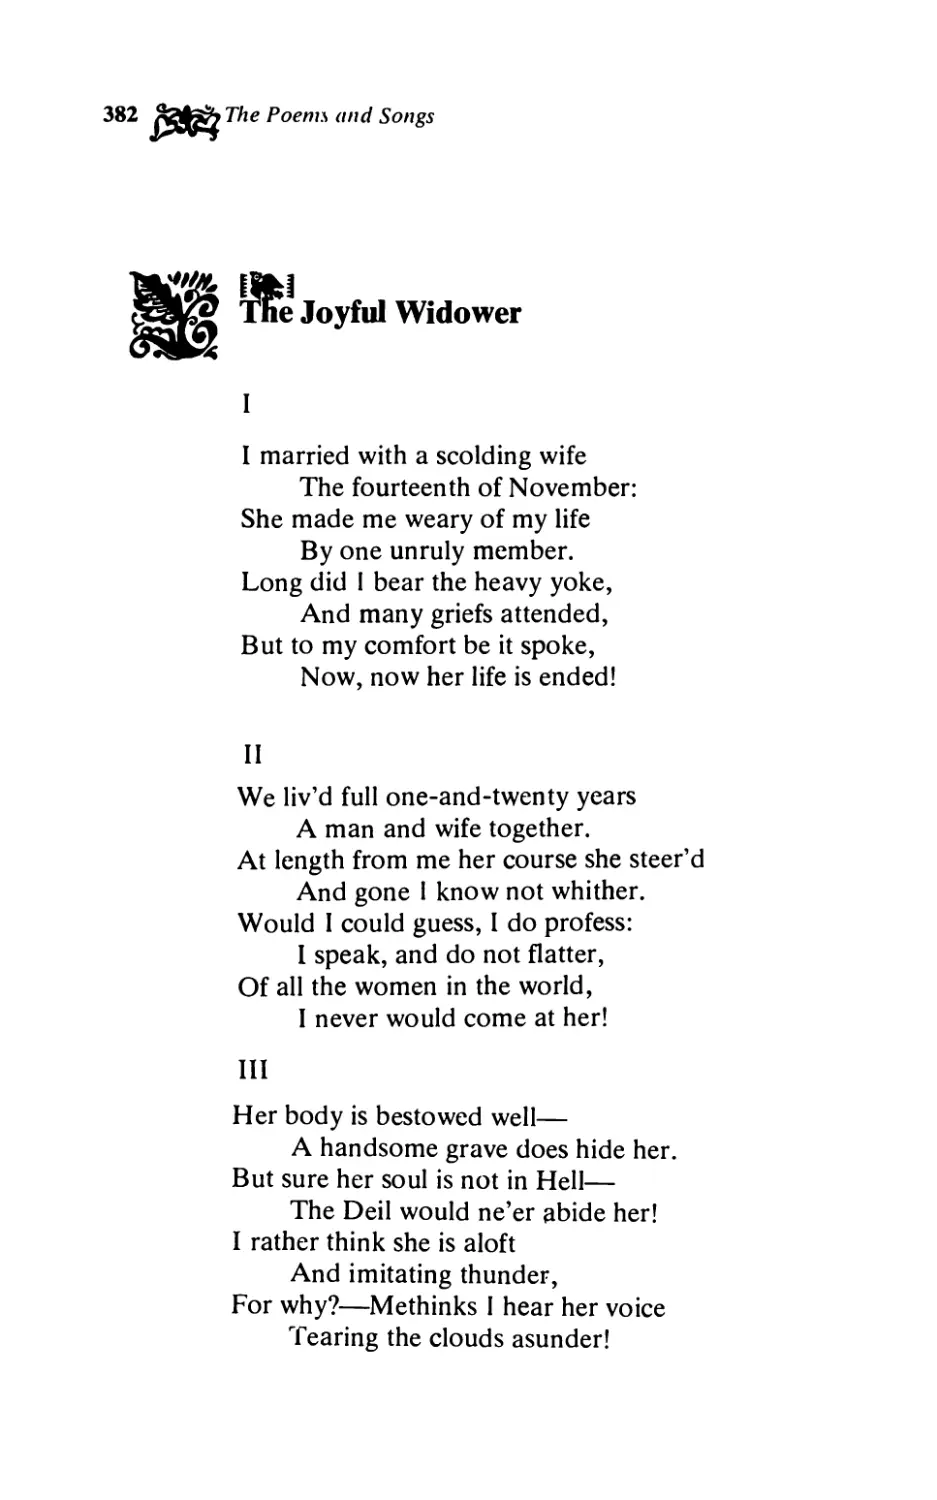 The Joyful Widower